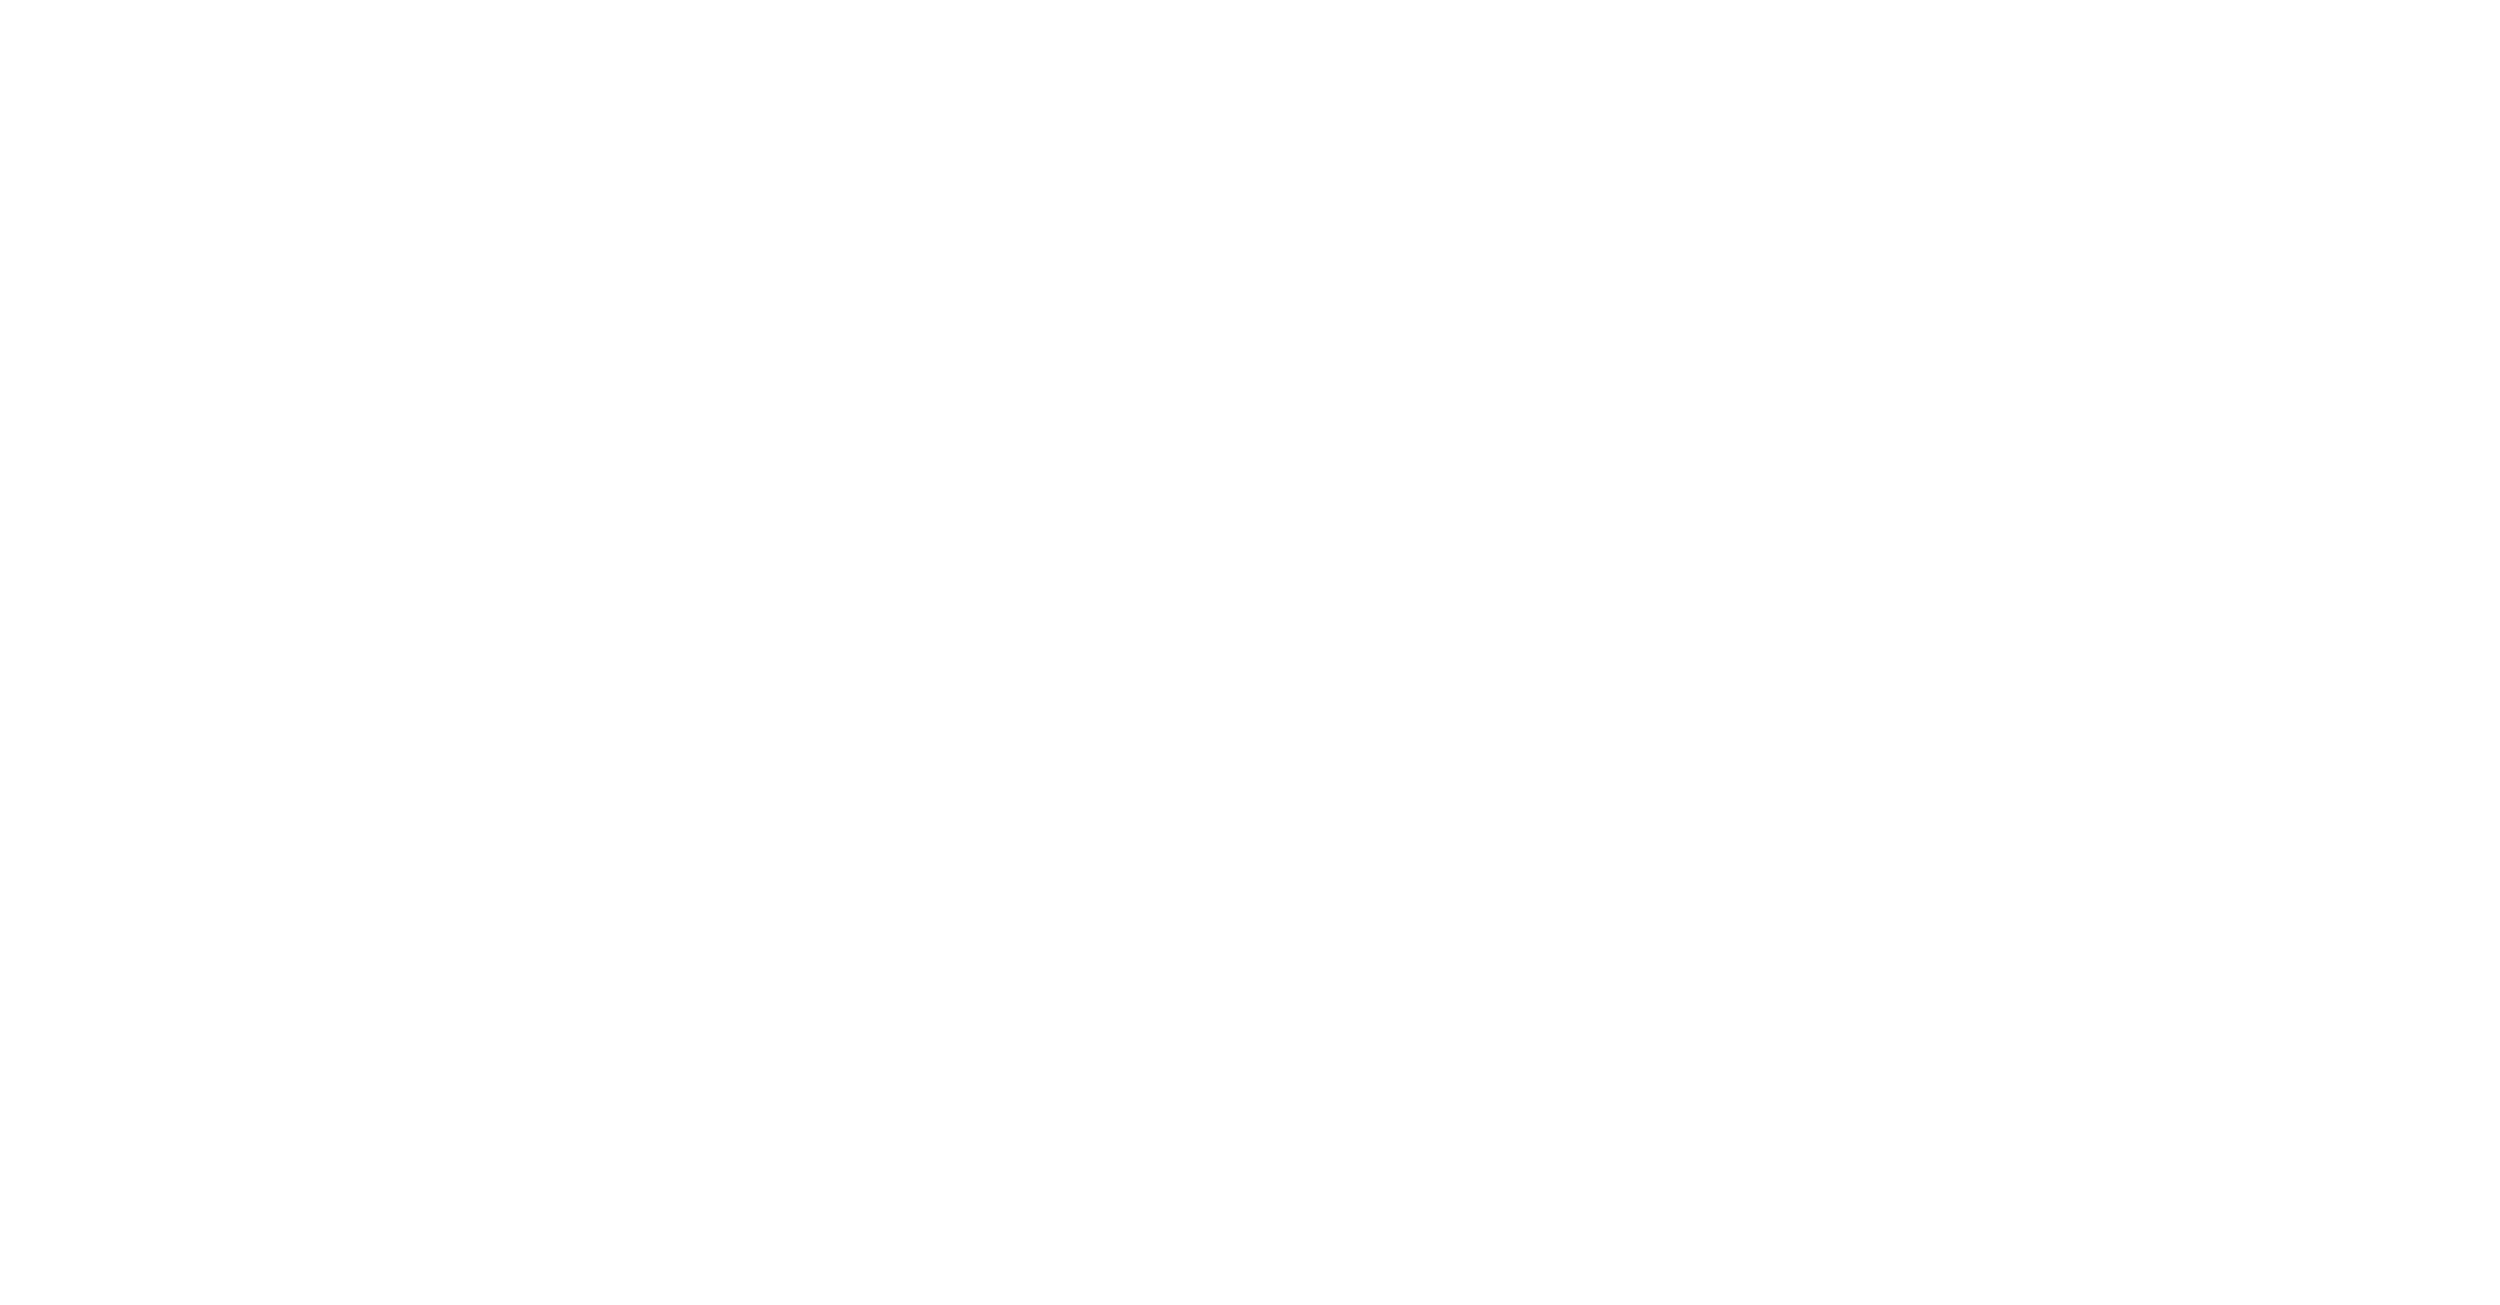 Craftsmen Events